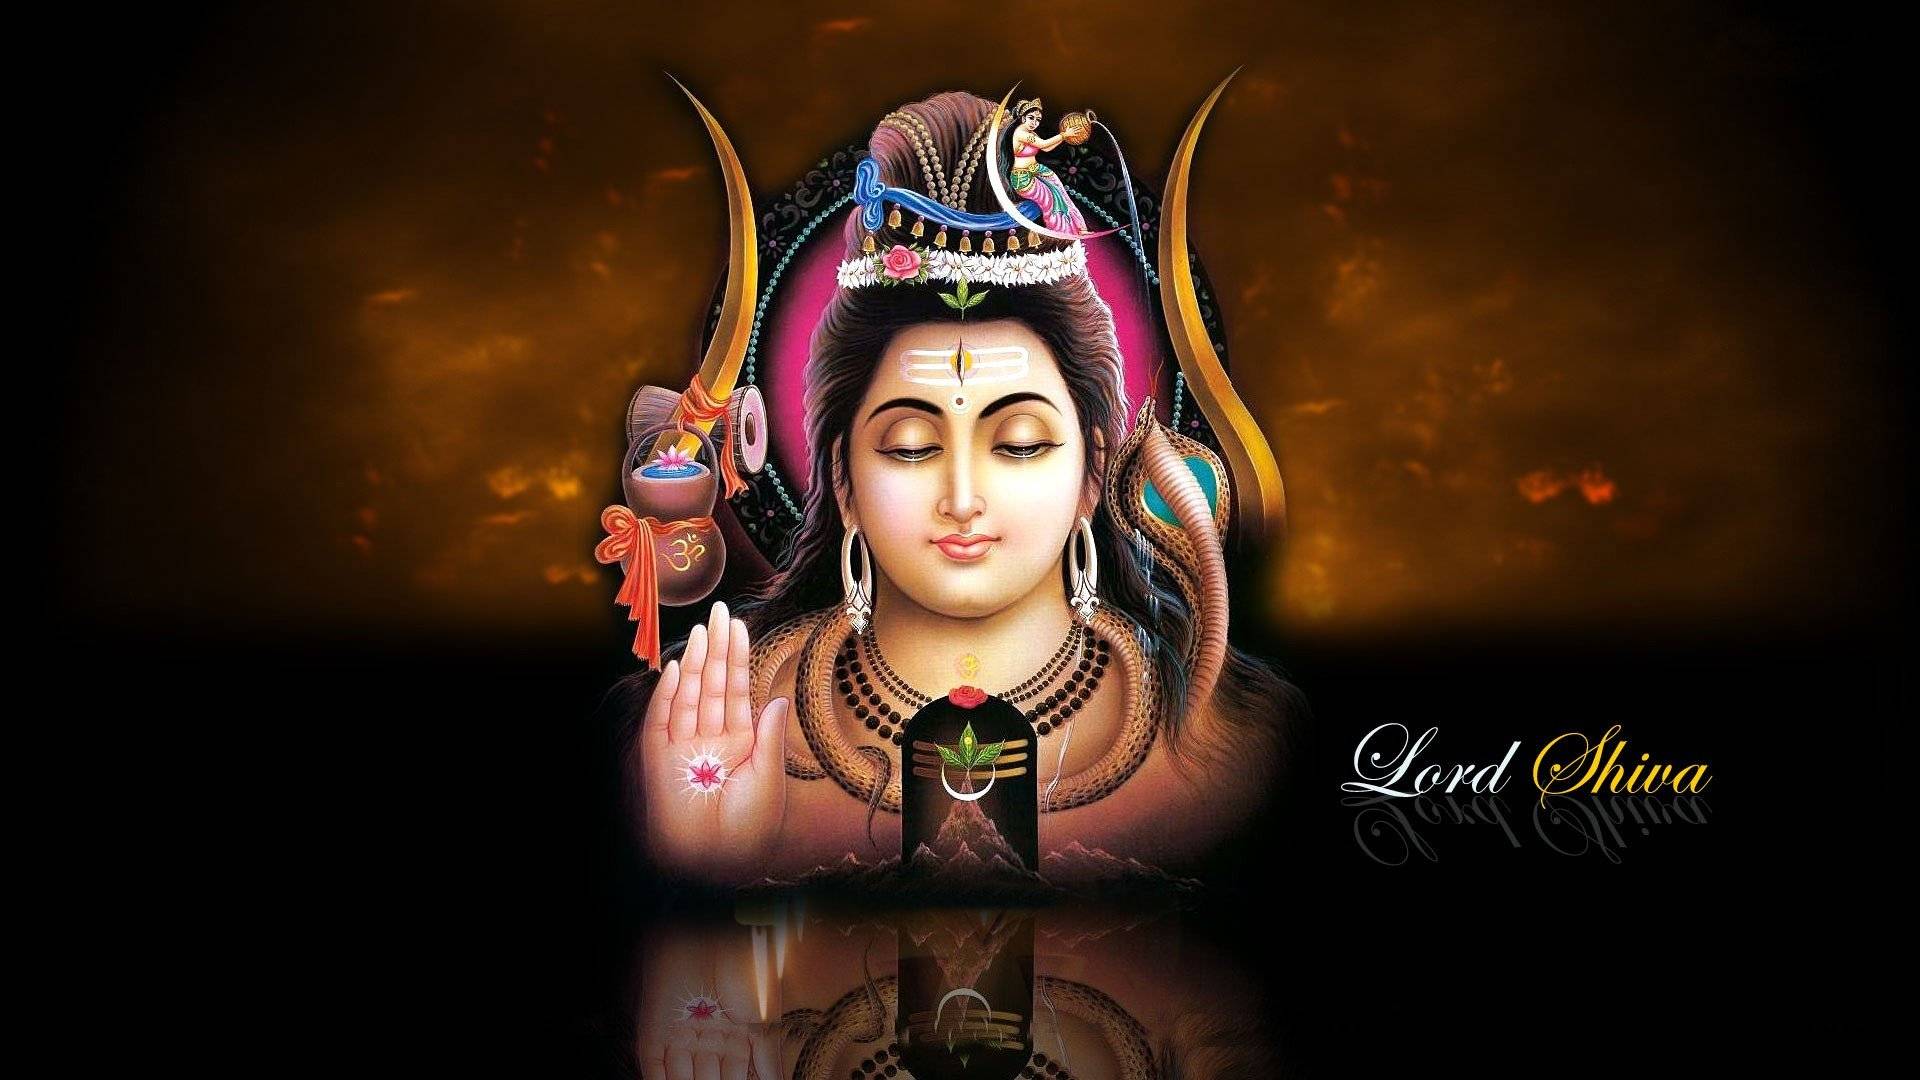 1920x1080 Lord Shiva Lord Shiva Hd Wallpapers 1080p